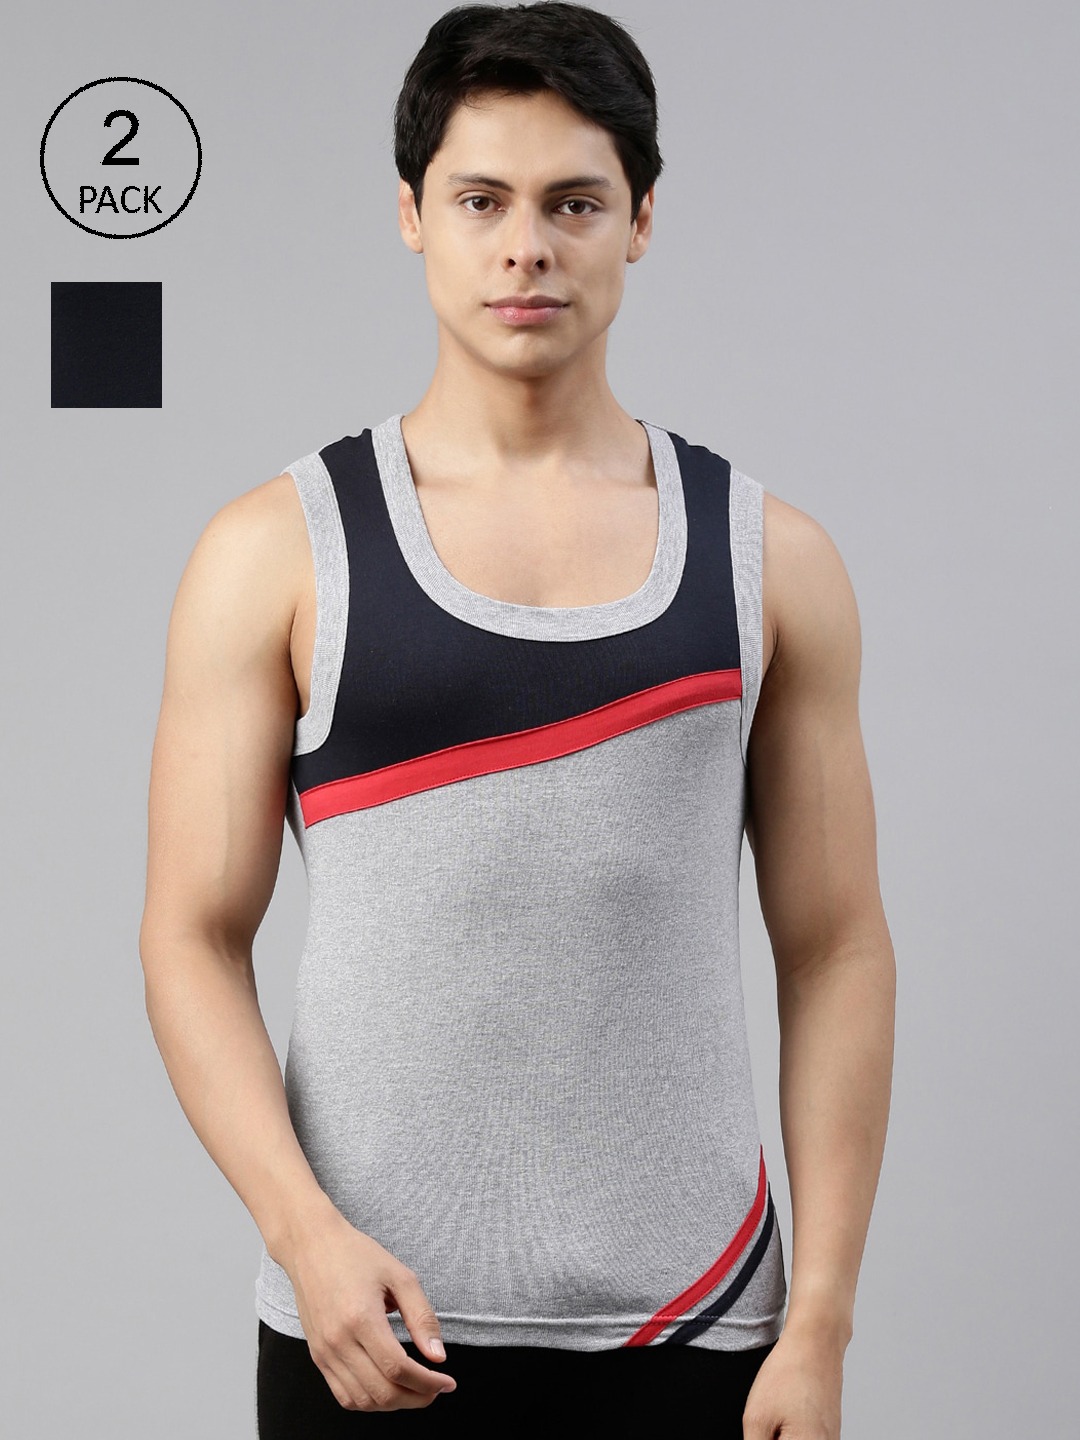 Clothing Innerwear Vests | DIXCY SCOTT Men Pack Of 2 Solid Cotton Gym Vests BOLD GYM VEST B 1400 - VA72605